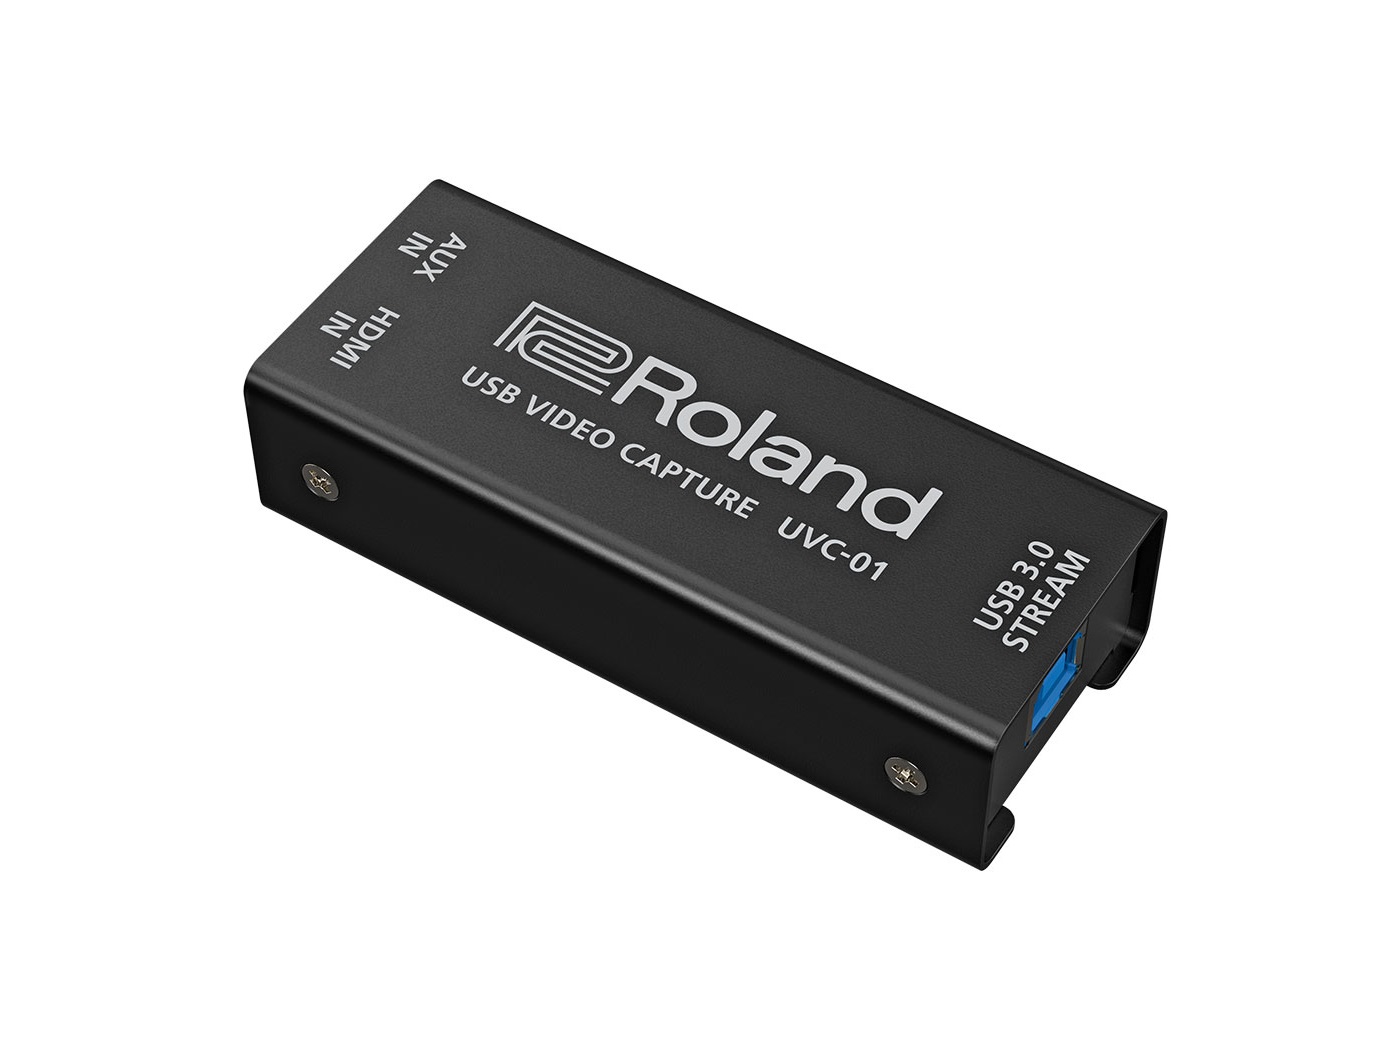 UVC-01 USB Video Capture by Roland